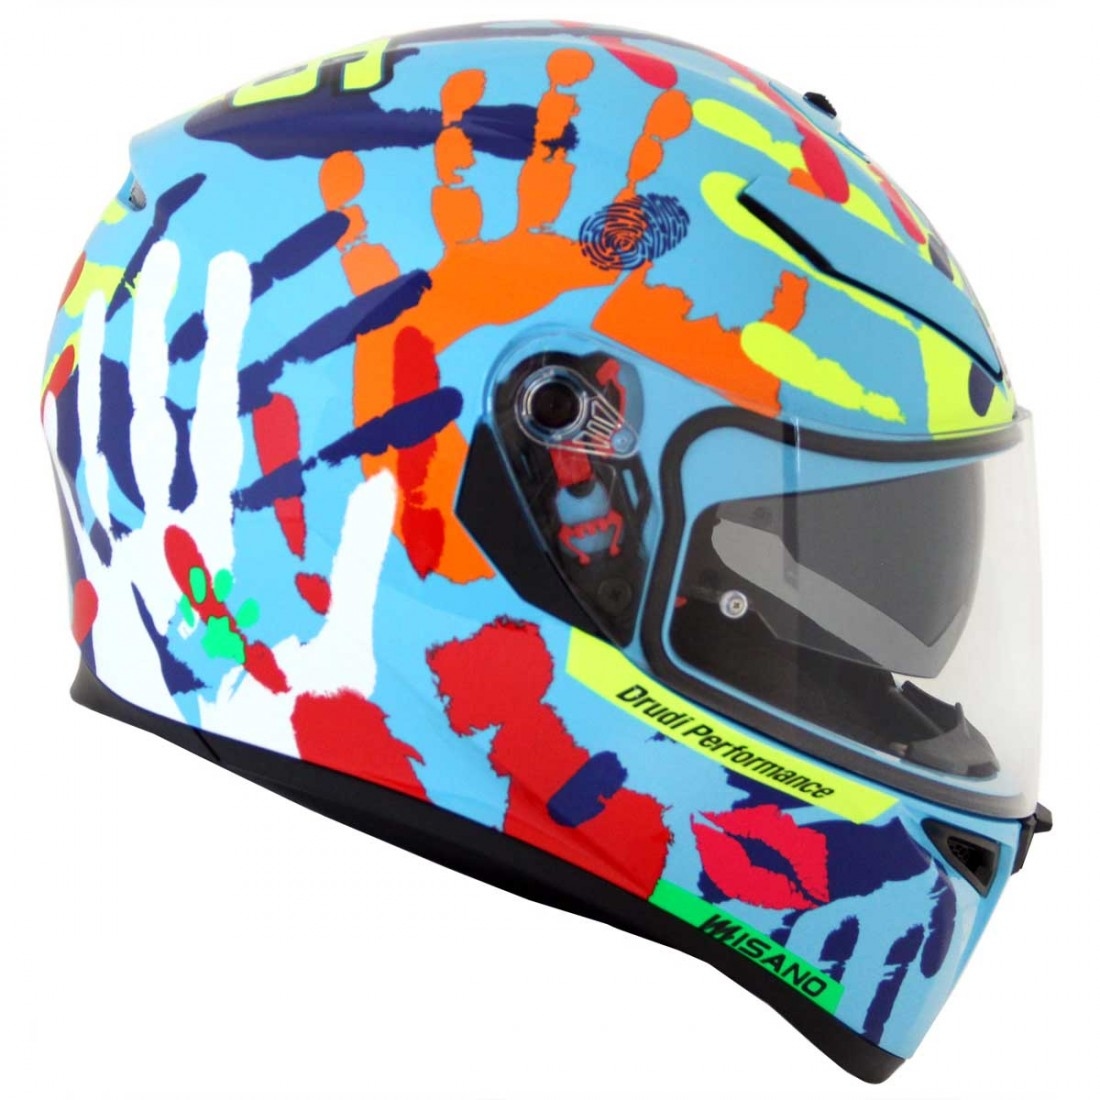 AGV K3 SV Rossi Misano 2014 | Full Face Helmets | FREE UK DELIVERY